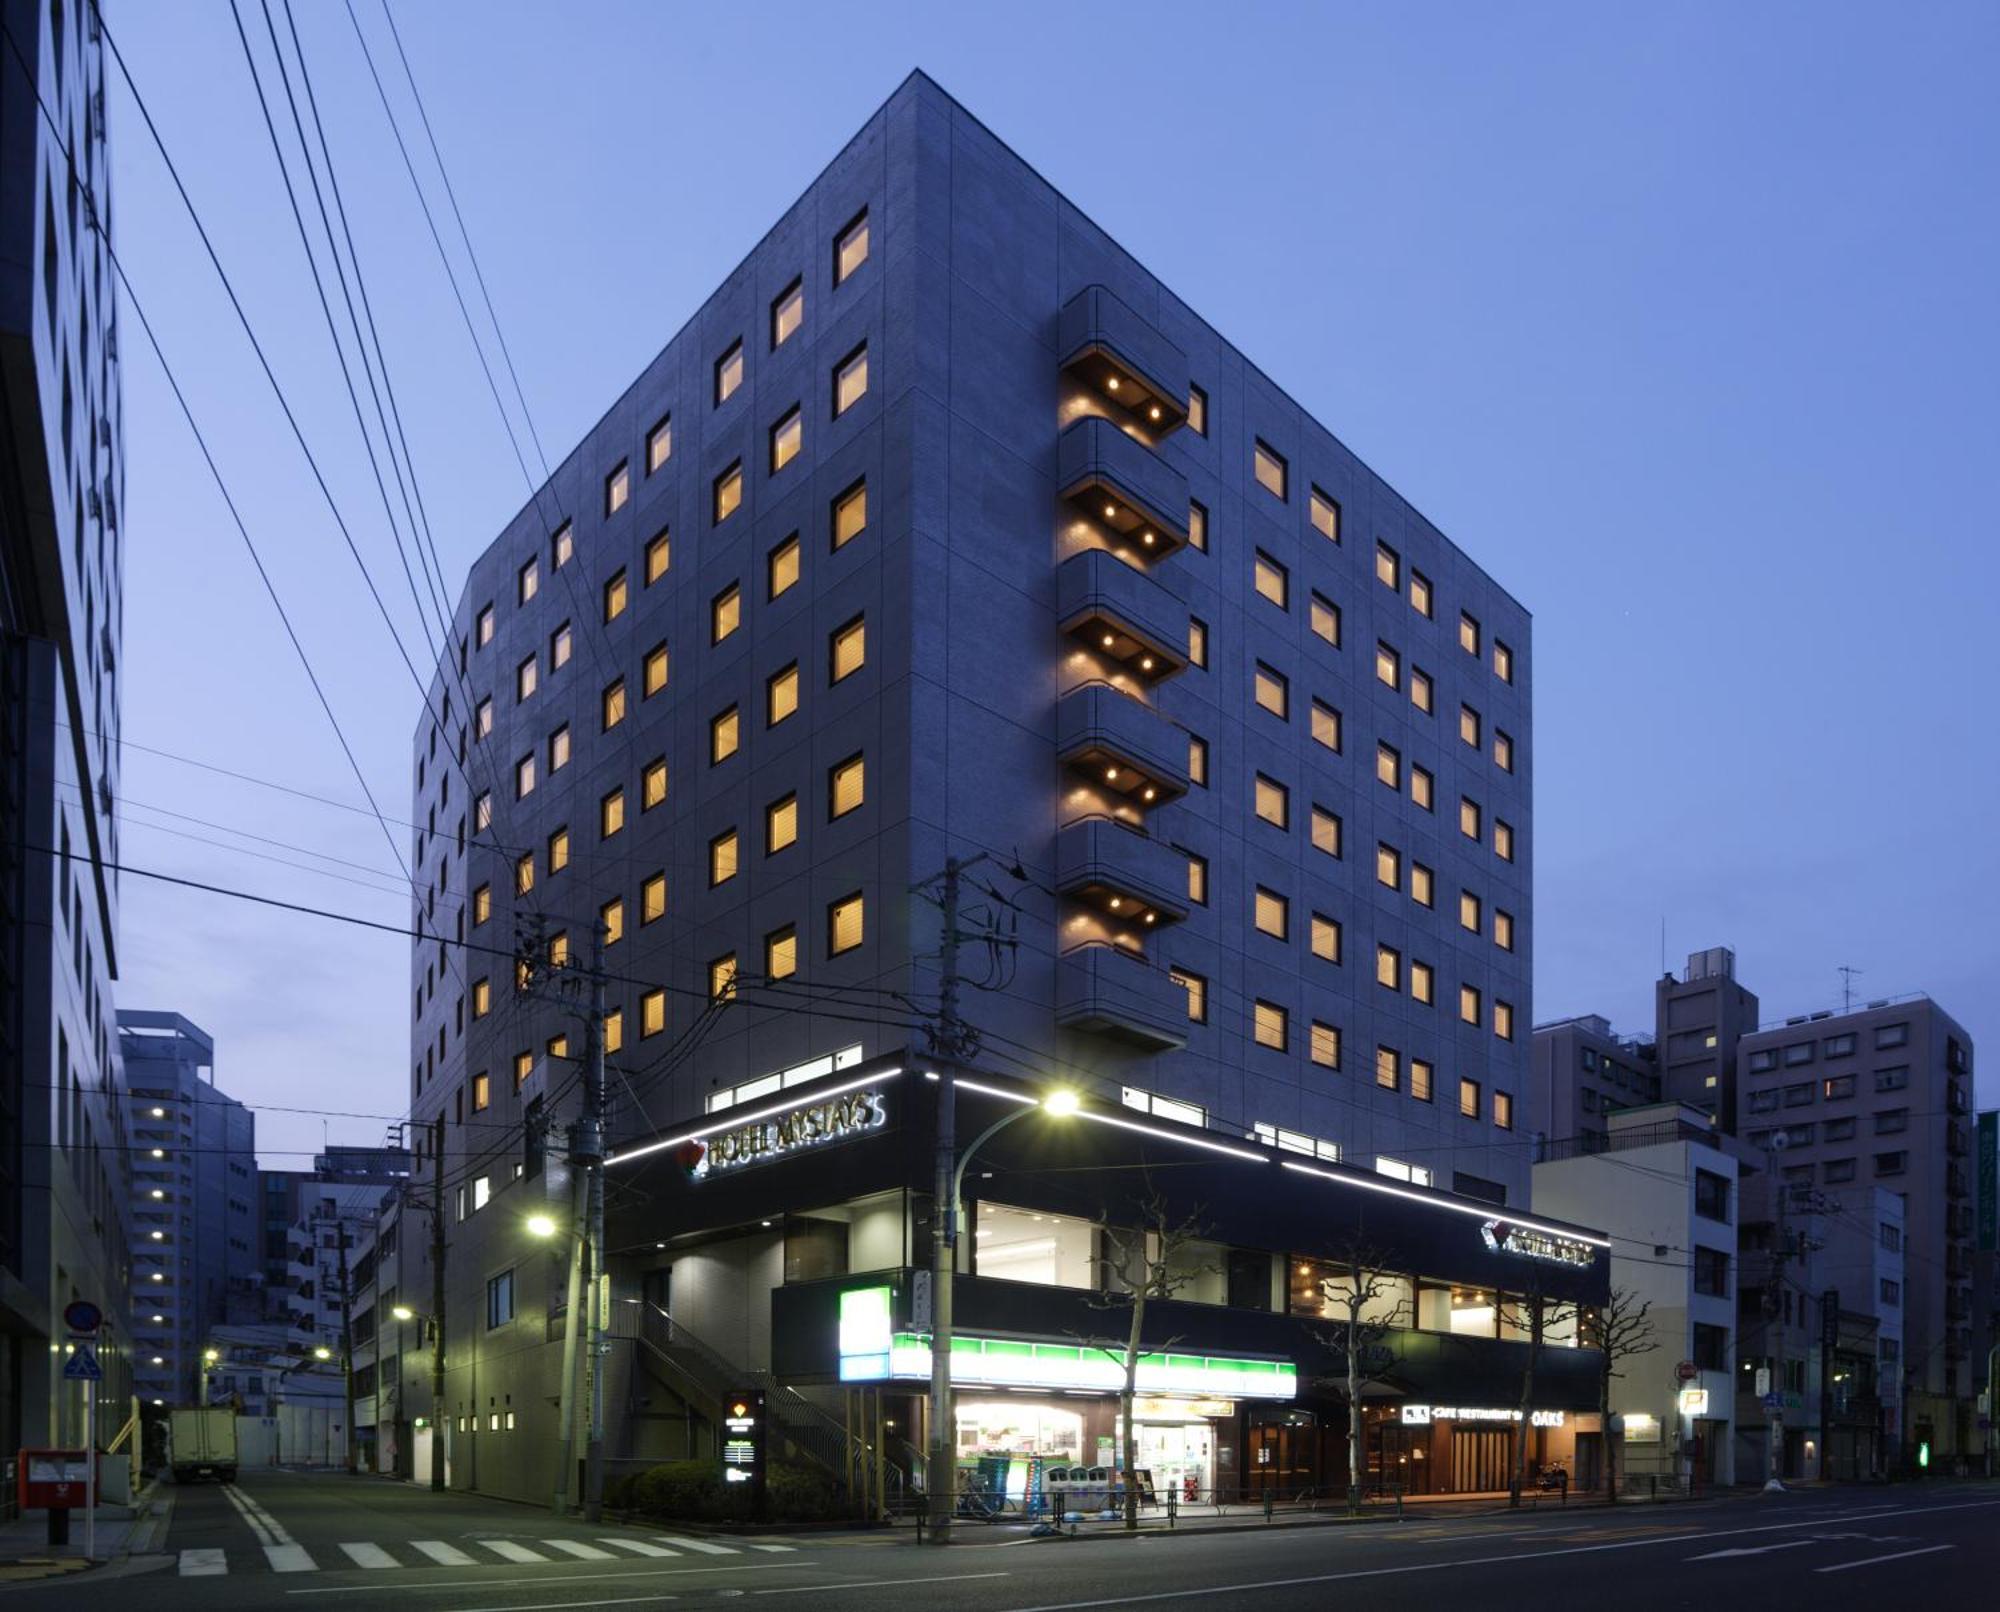 Hotel Mystays Ochanomizu Conference Center Tokio Buitenkant foto